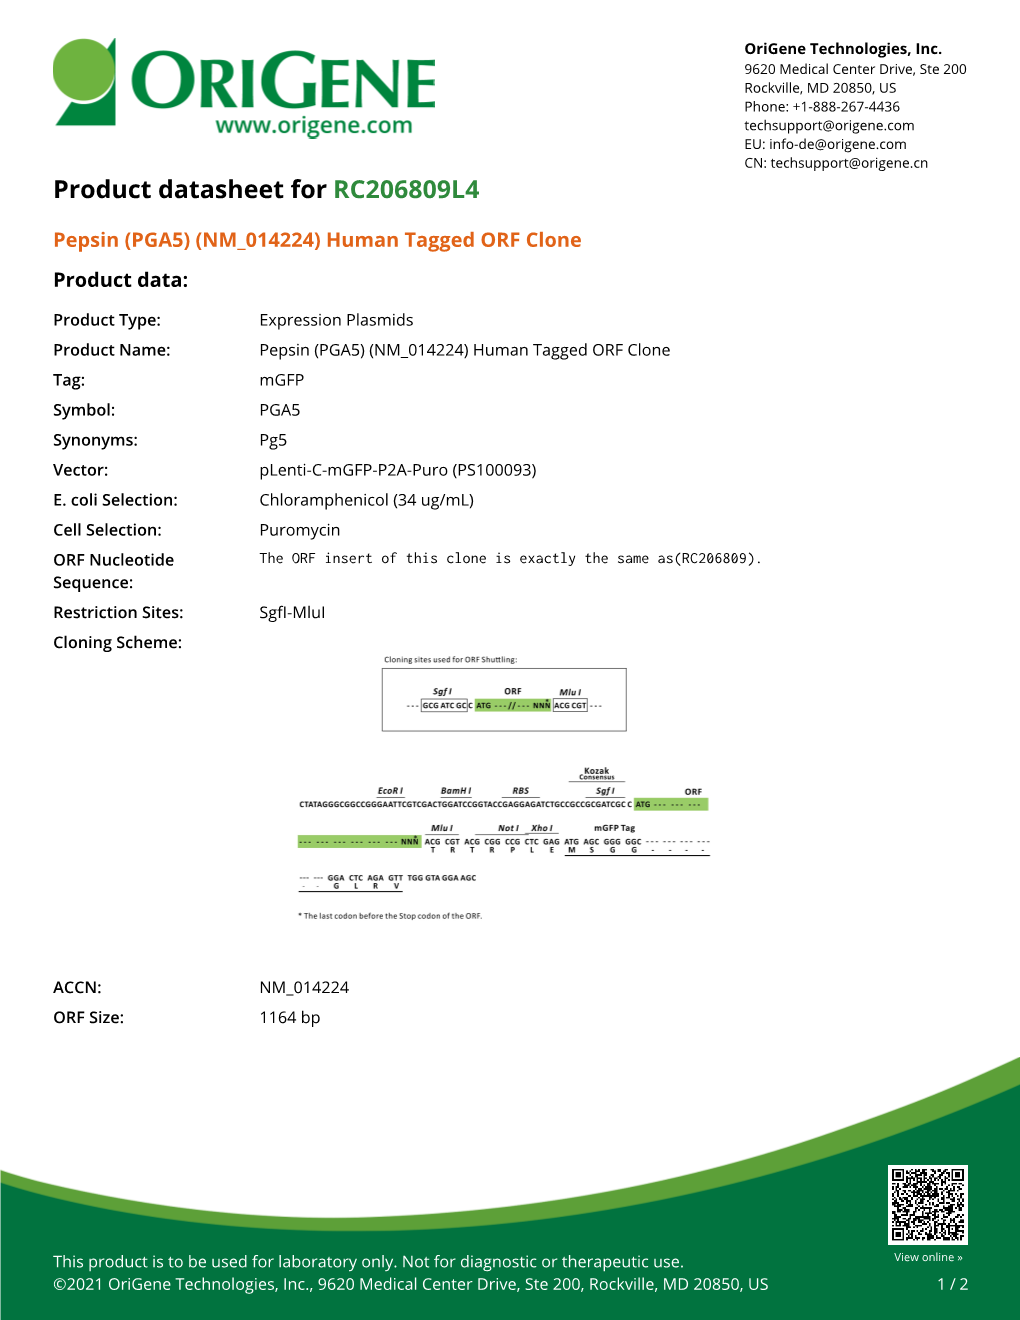 Pepsin (PGA5) (NM 014224) Human Tagged ORF Clone Product Data